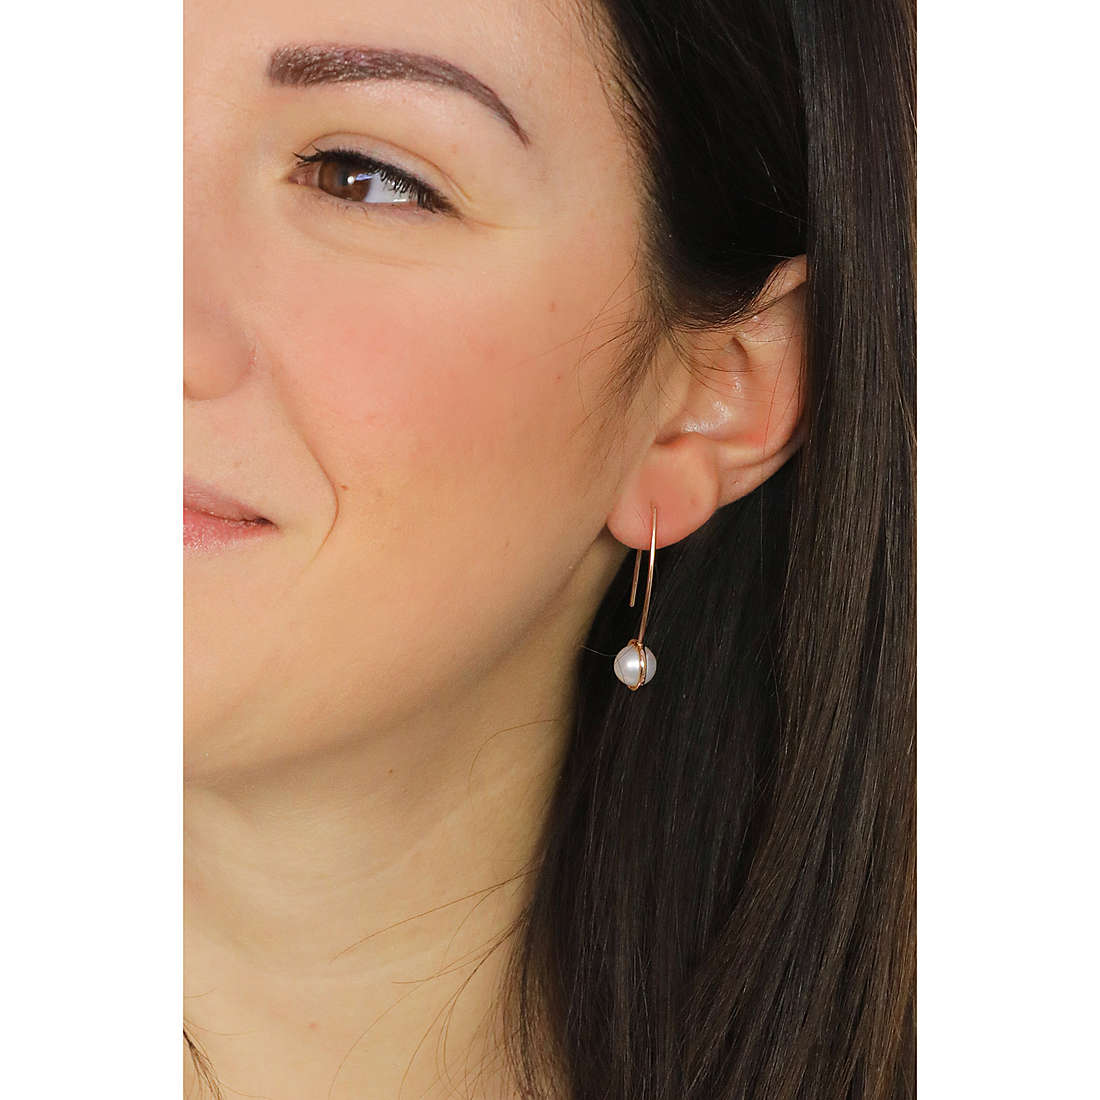 Emporio Armani earrings woman EG3534221 wearing